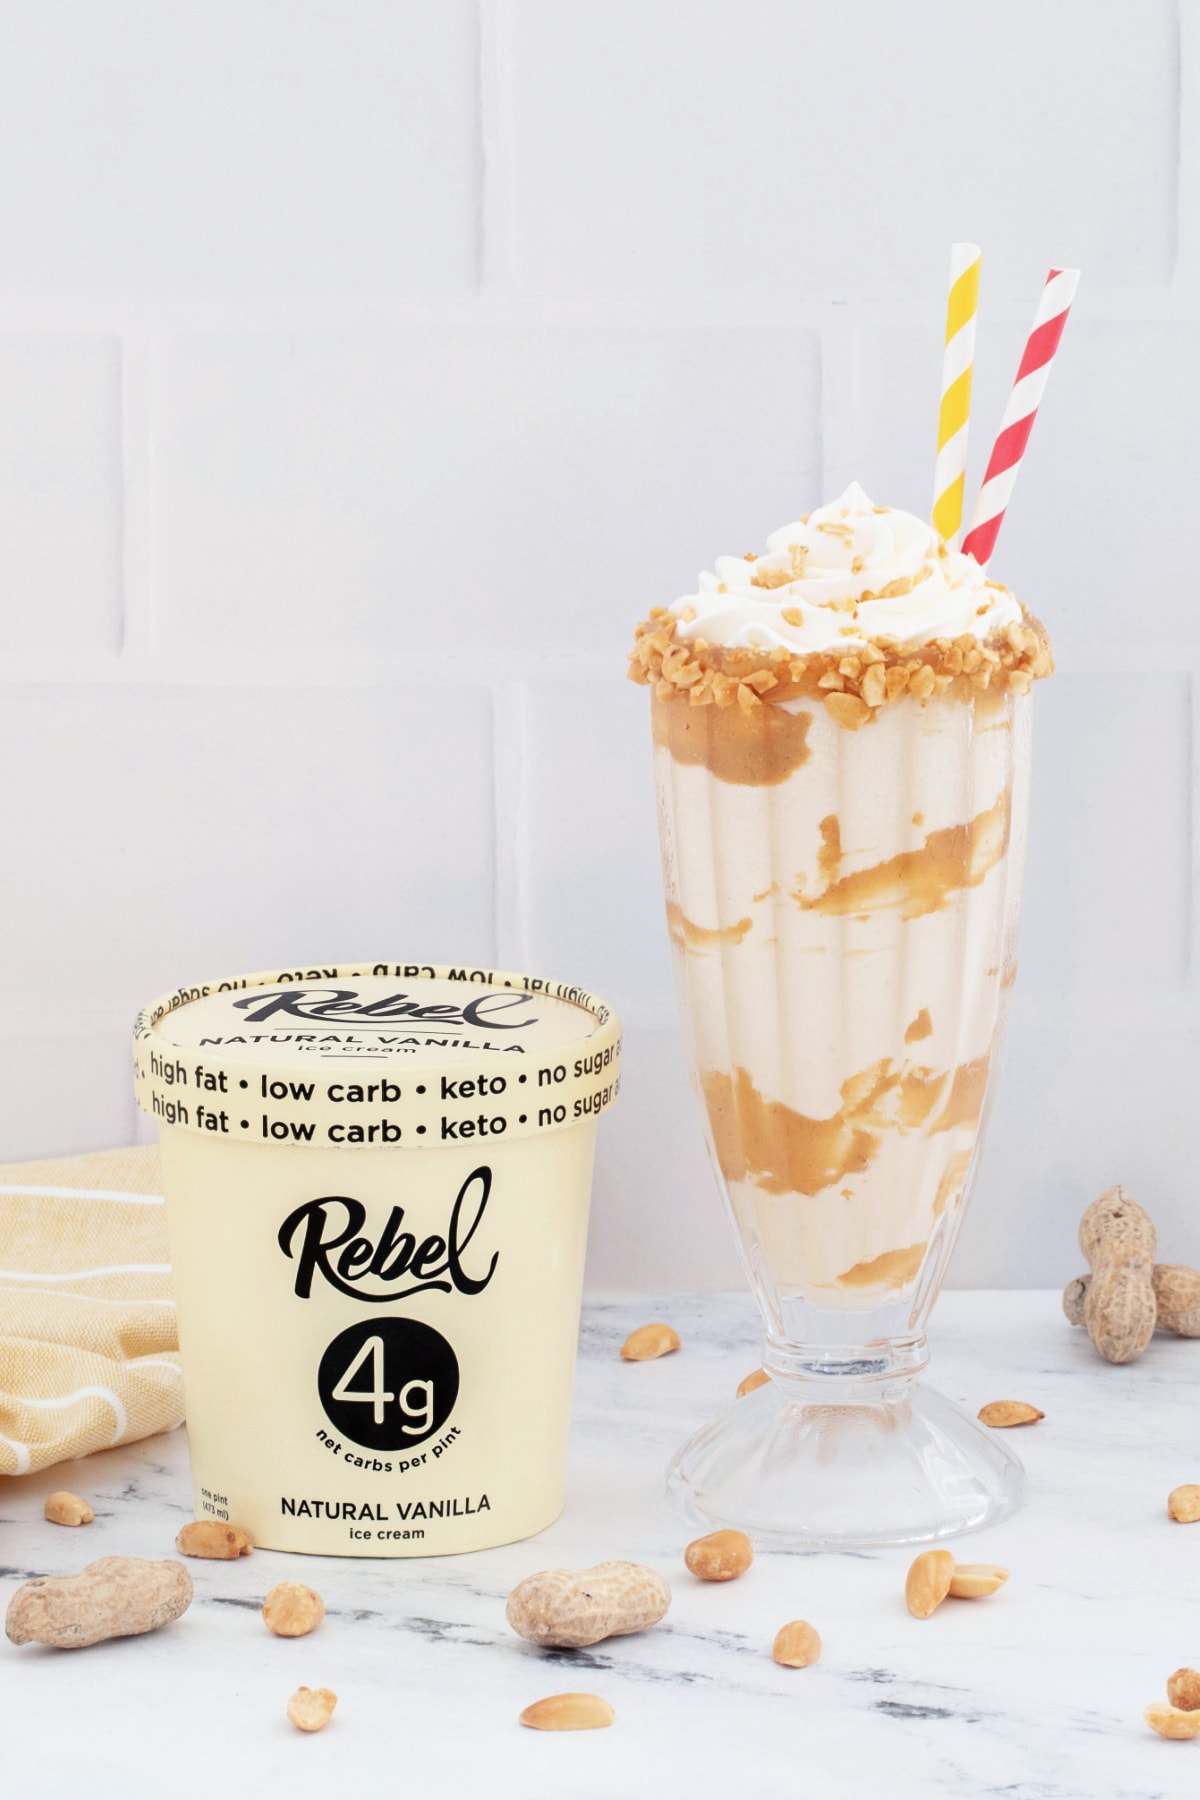 Milkshake with carton of Rebel Ice Cream